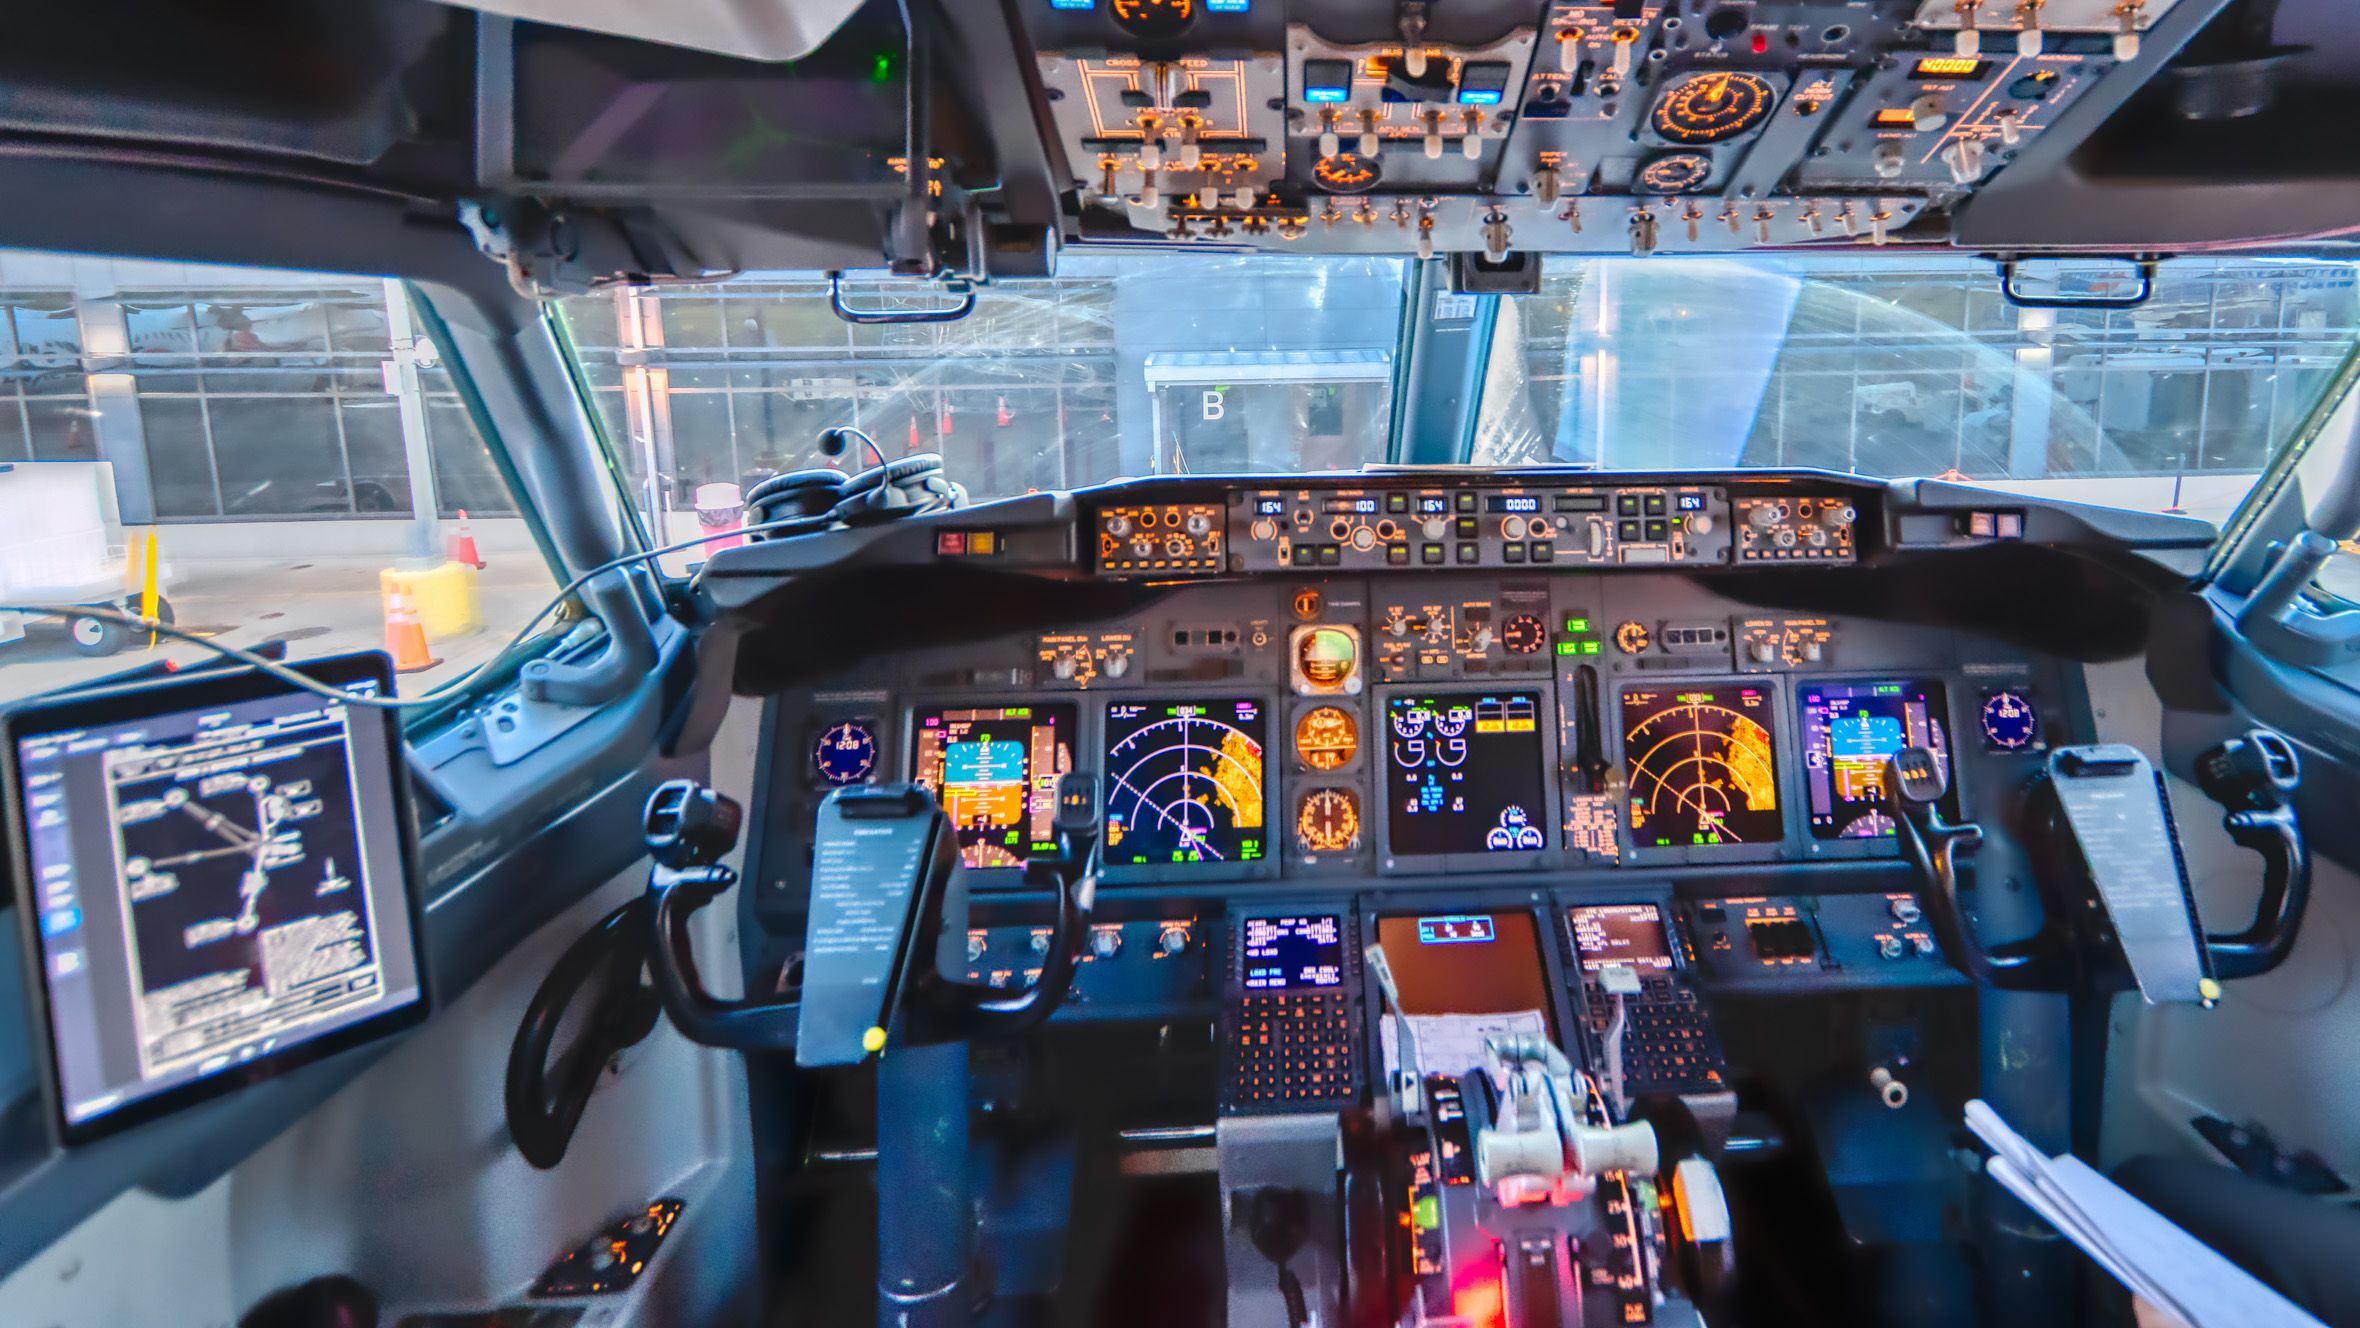 737-700 Cockpit in 16-9 Widescreen v2